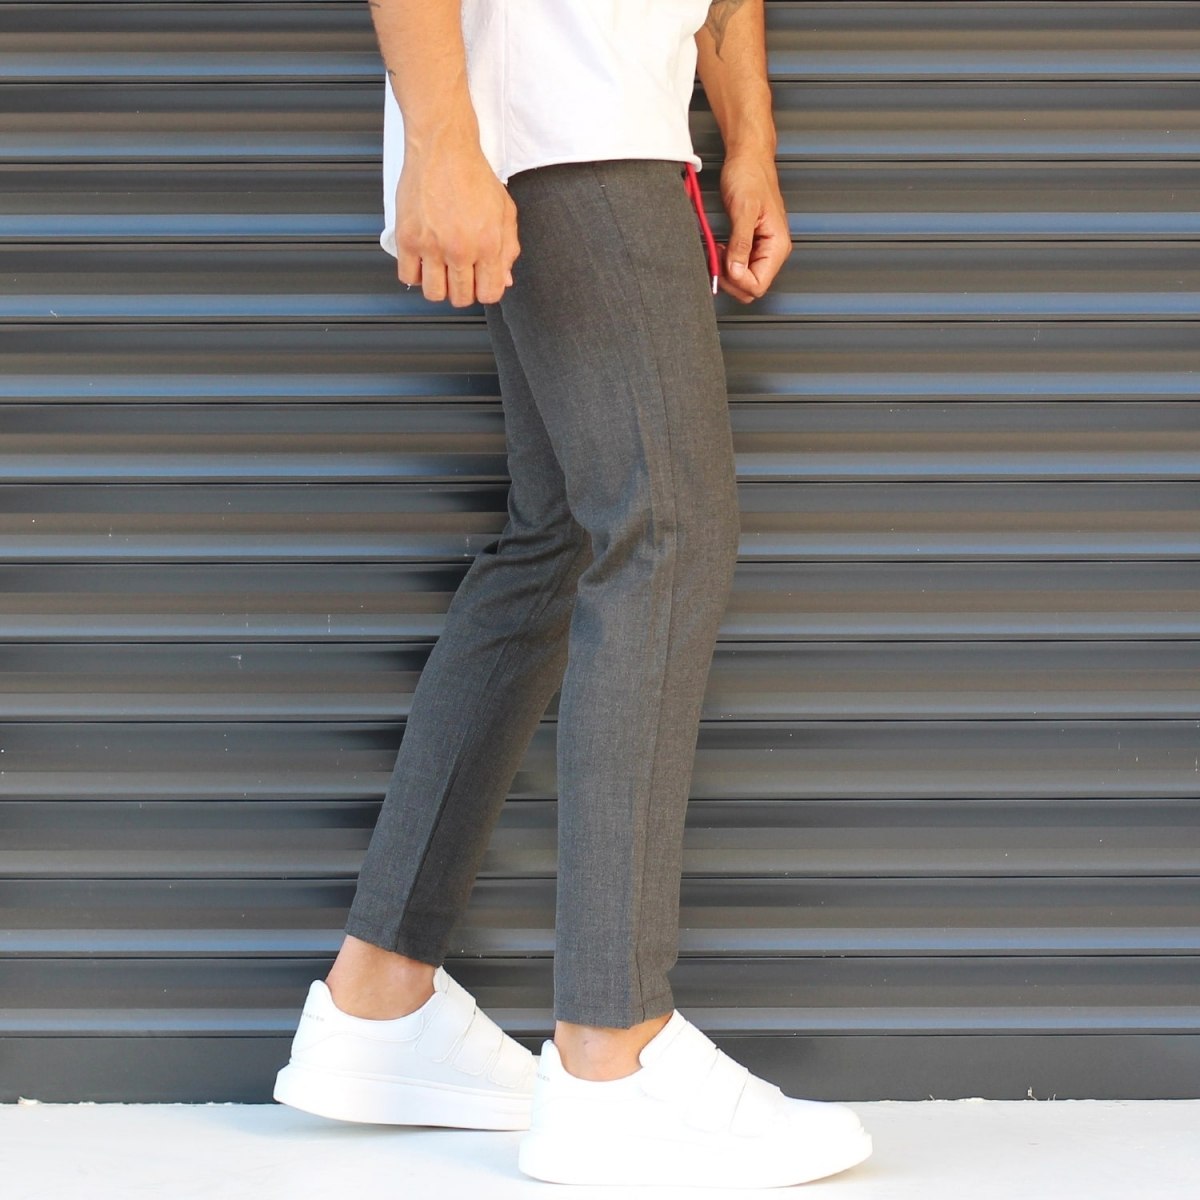 Firoji Color Men's Casual Lycra Pants Stretchable Less Weight Lycra Pants  for Men